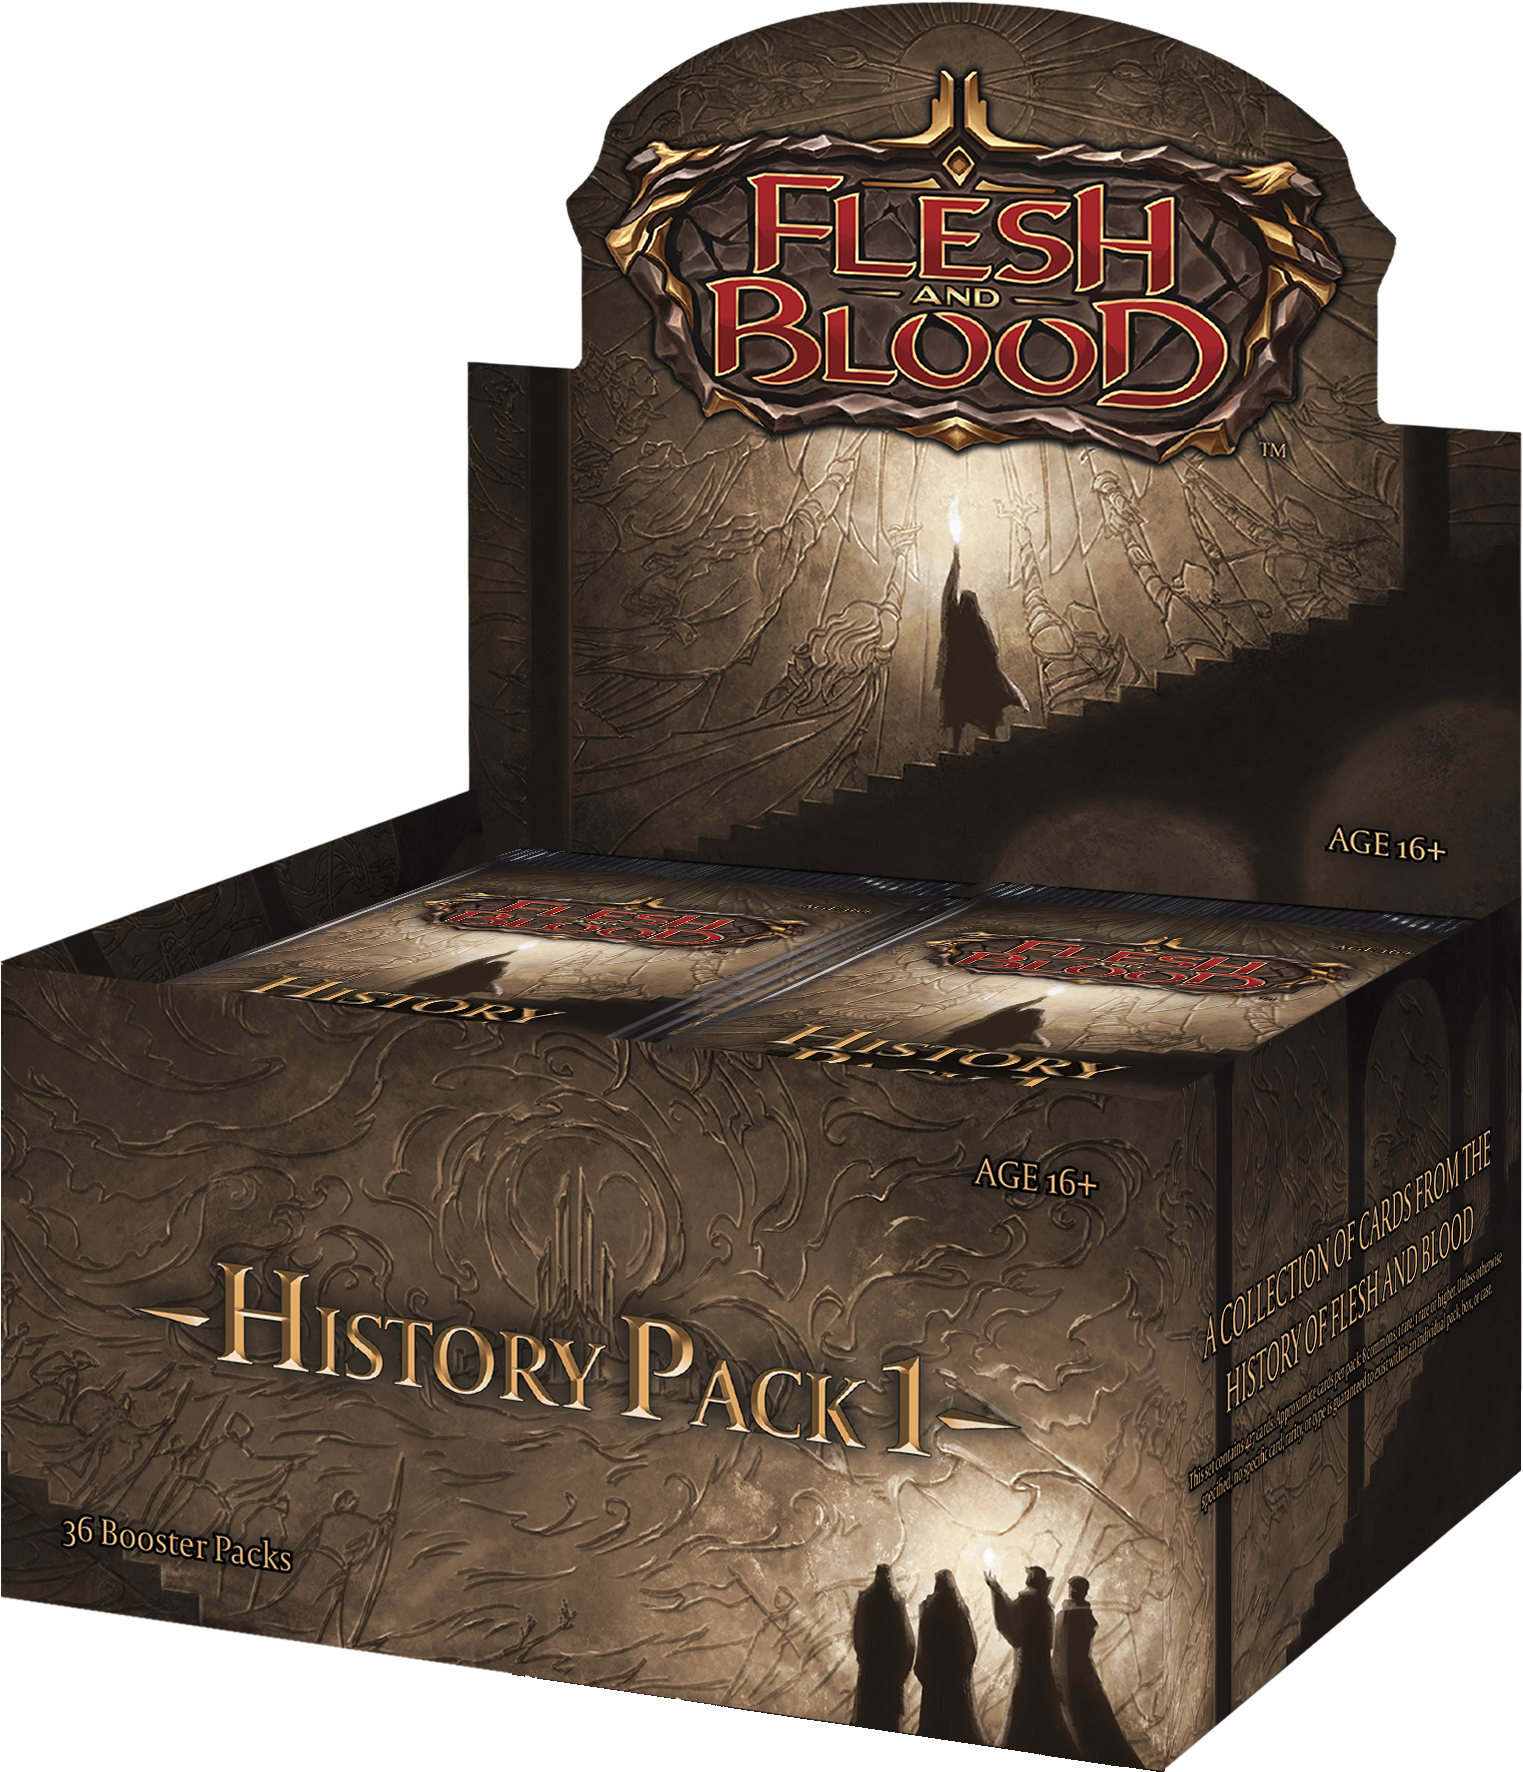  Flesh & Blood TCG - History Pack 1 (36 Packs) - EN